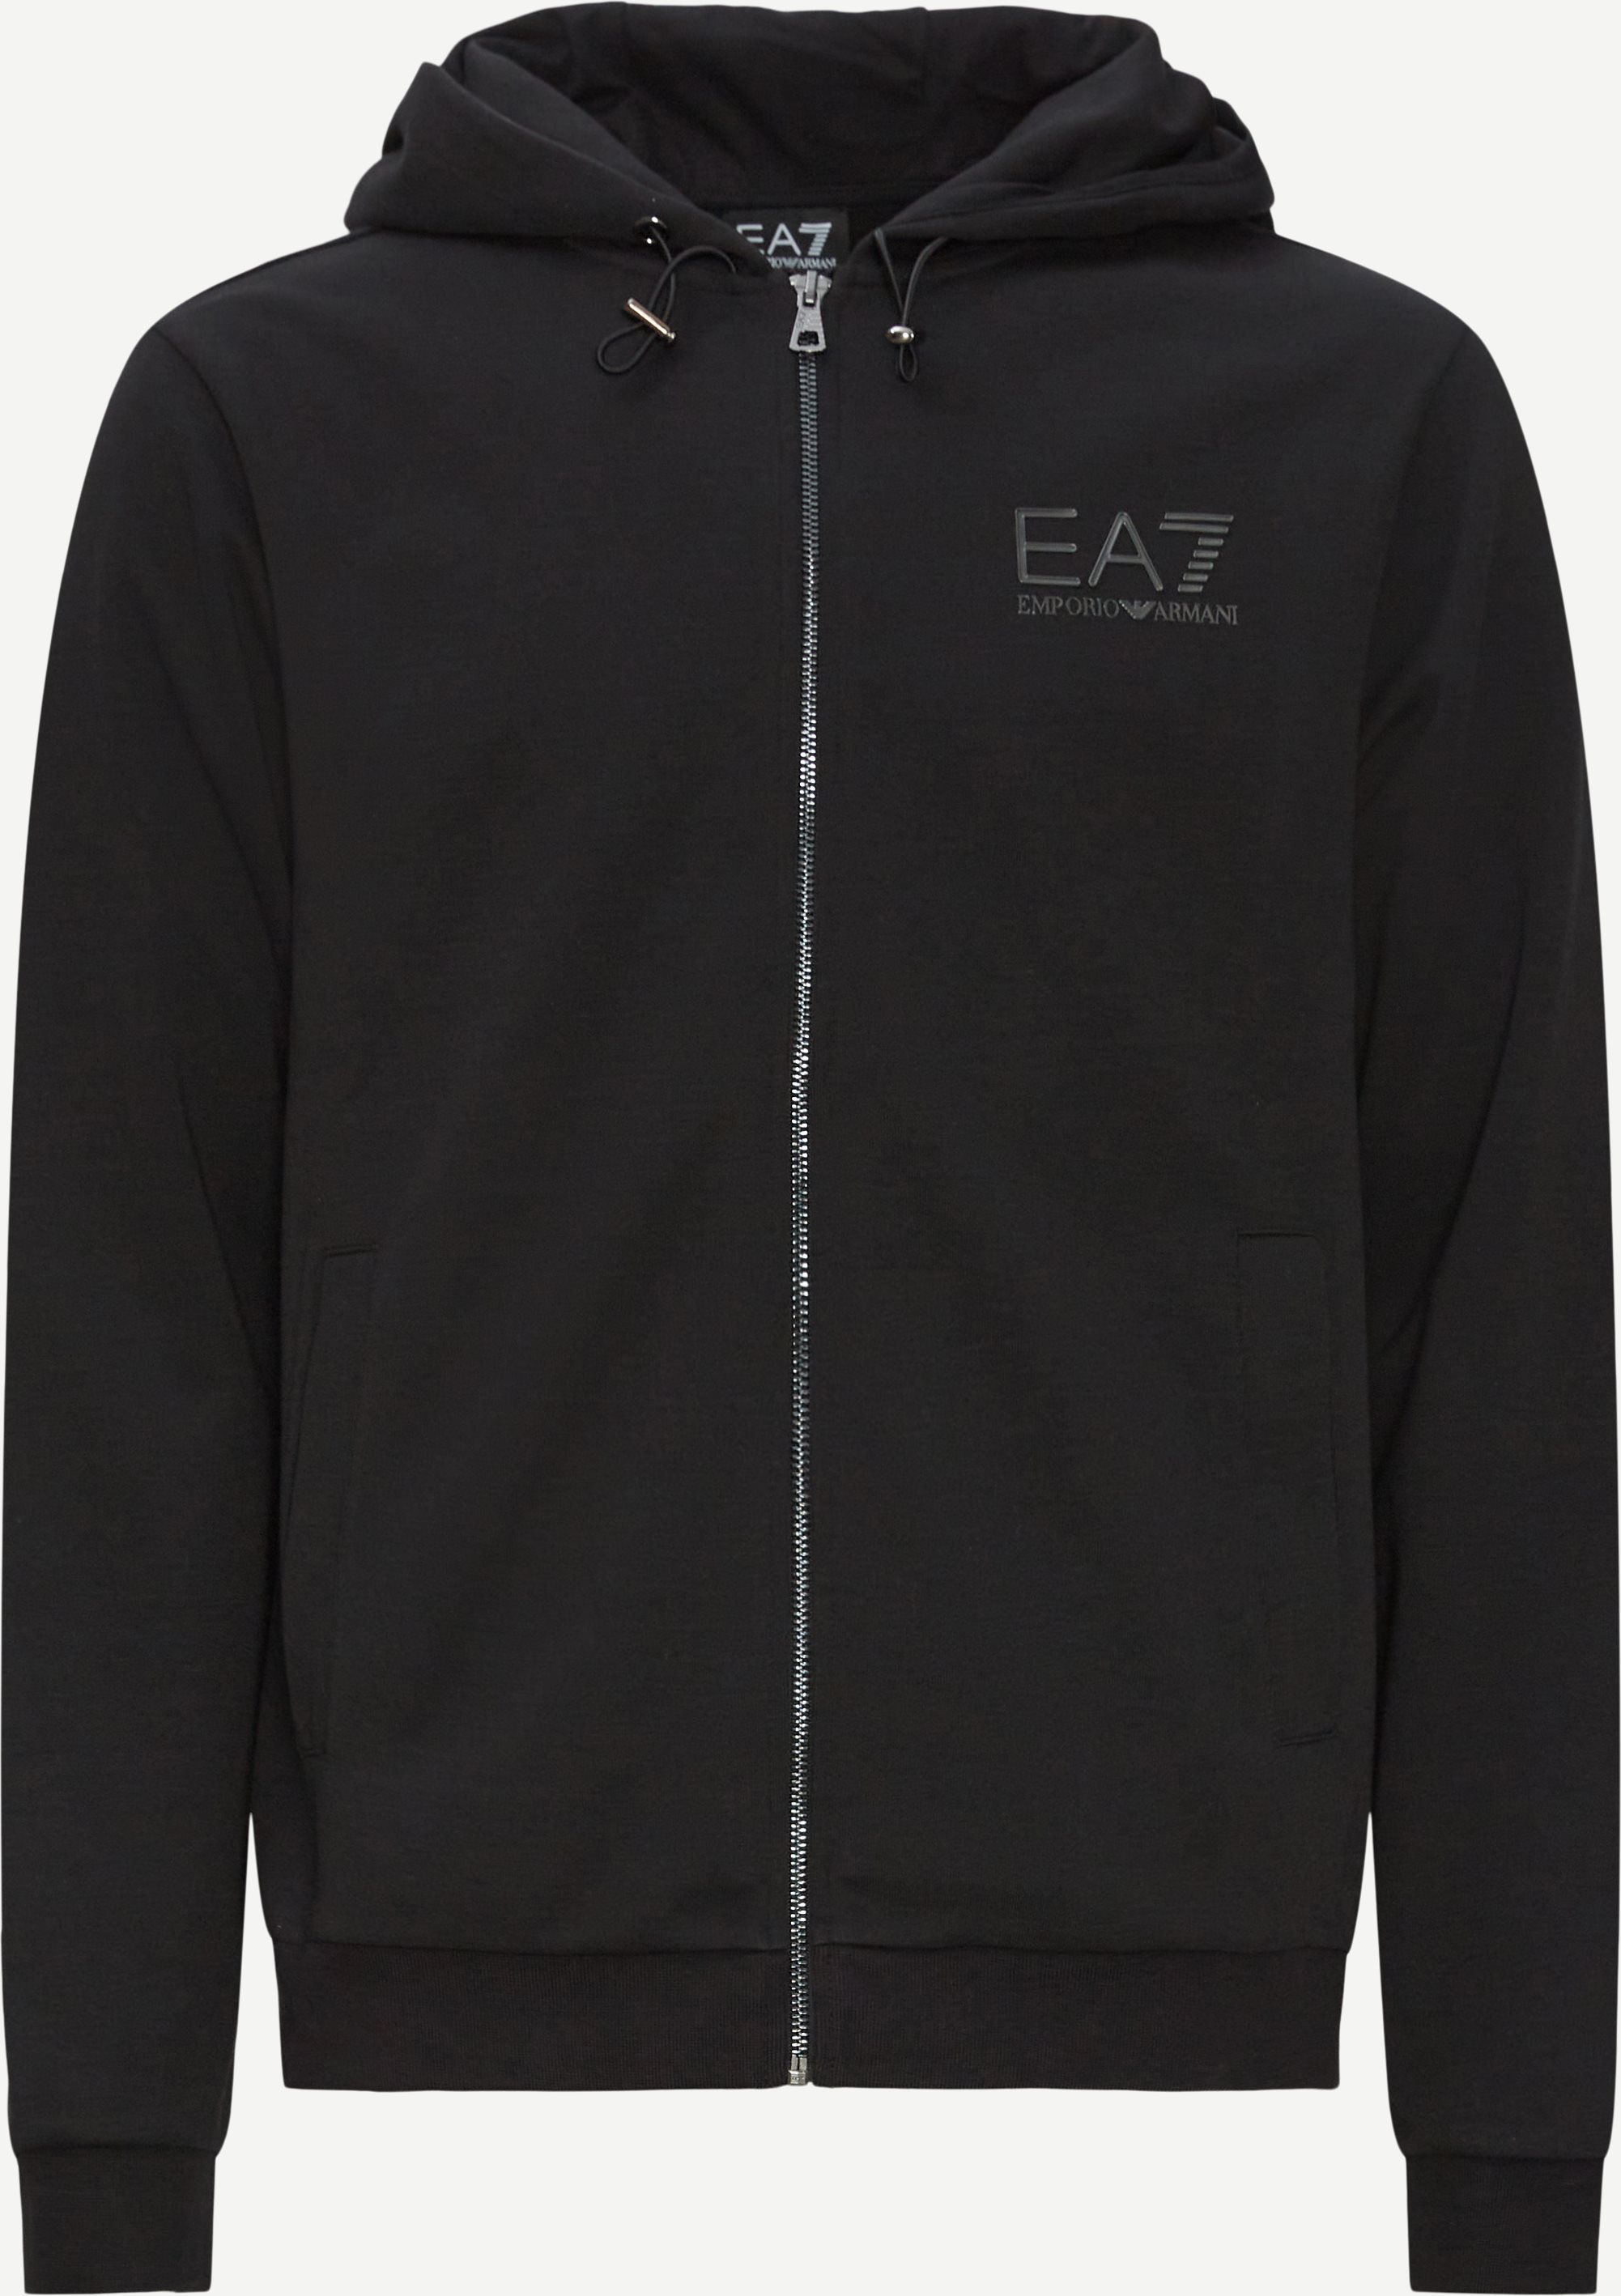 EA7 Sweatshirts PJARZ 6LPM82 Black